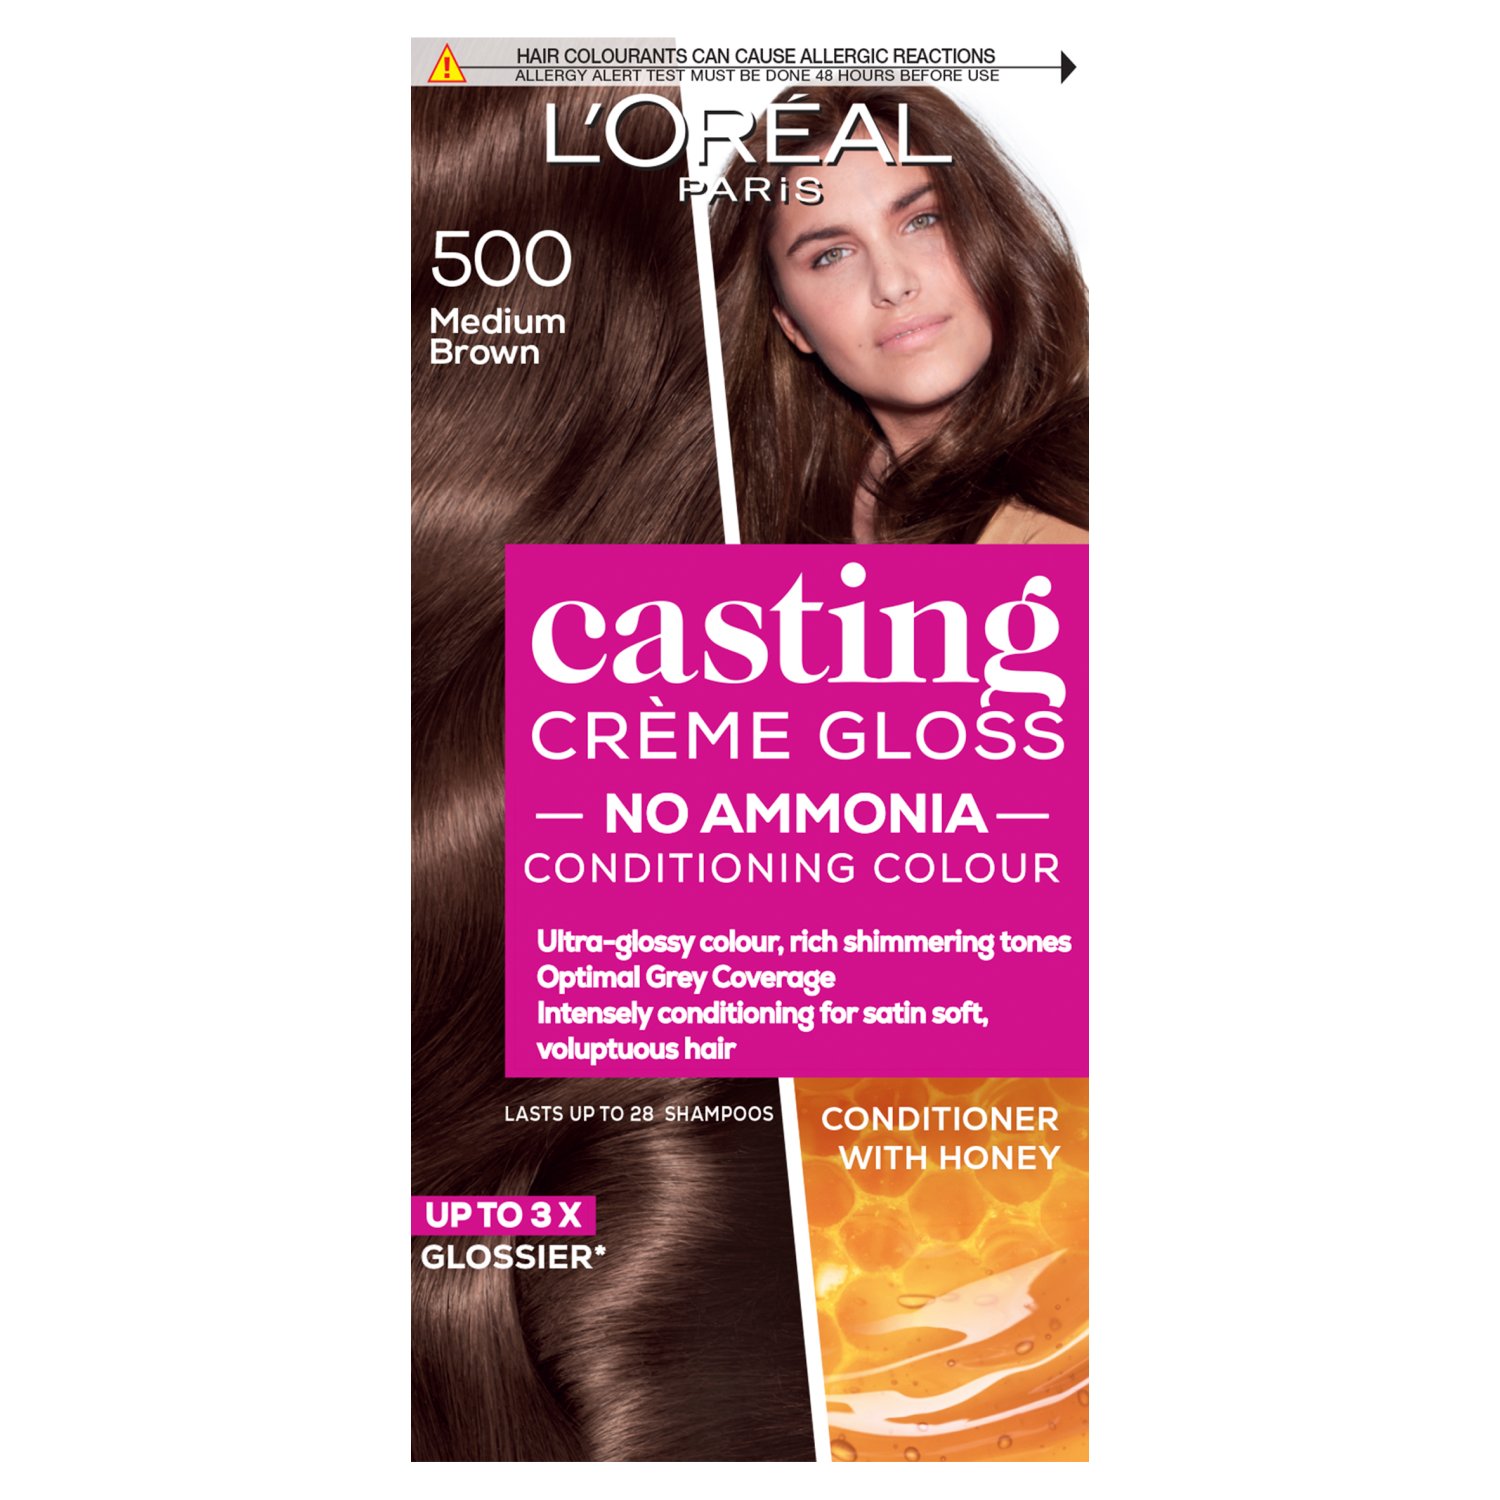 L'Oreal Casting Creme Gloss Medium Brown Hair Dye (1 Piece)